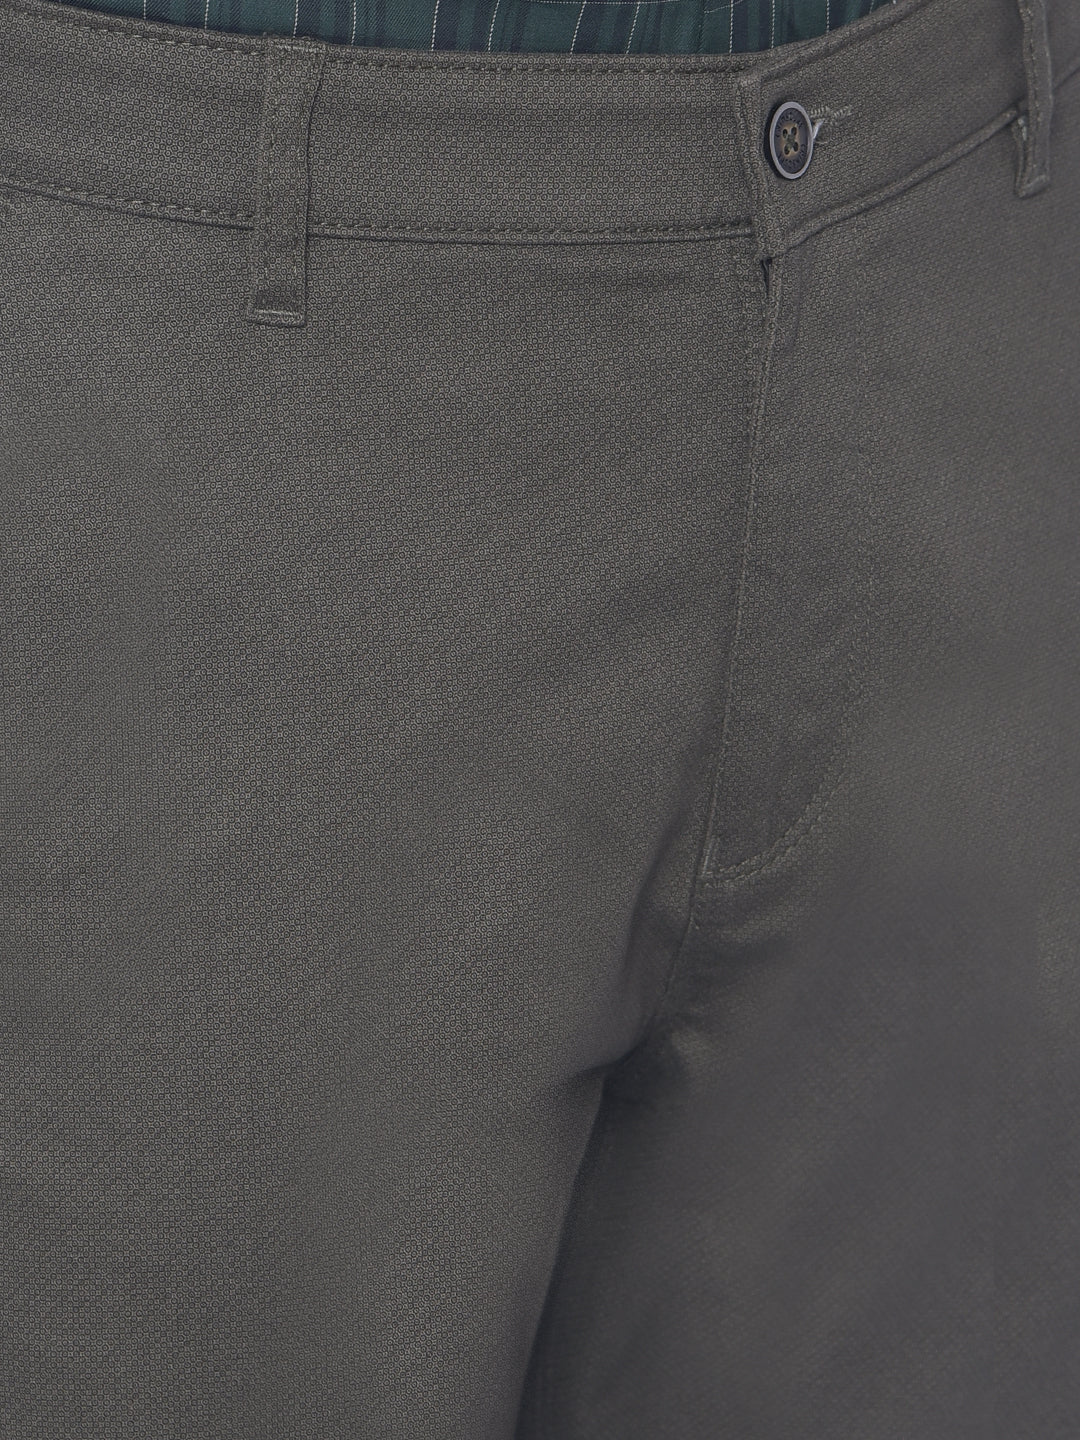 Olive Printed Trousers-Men Trousers-Crimsoune Club